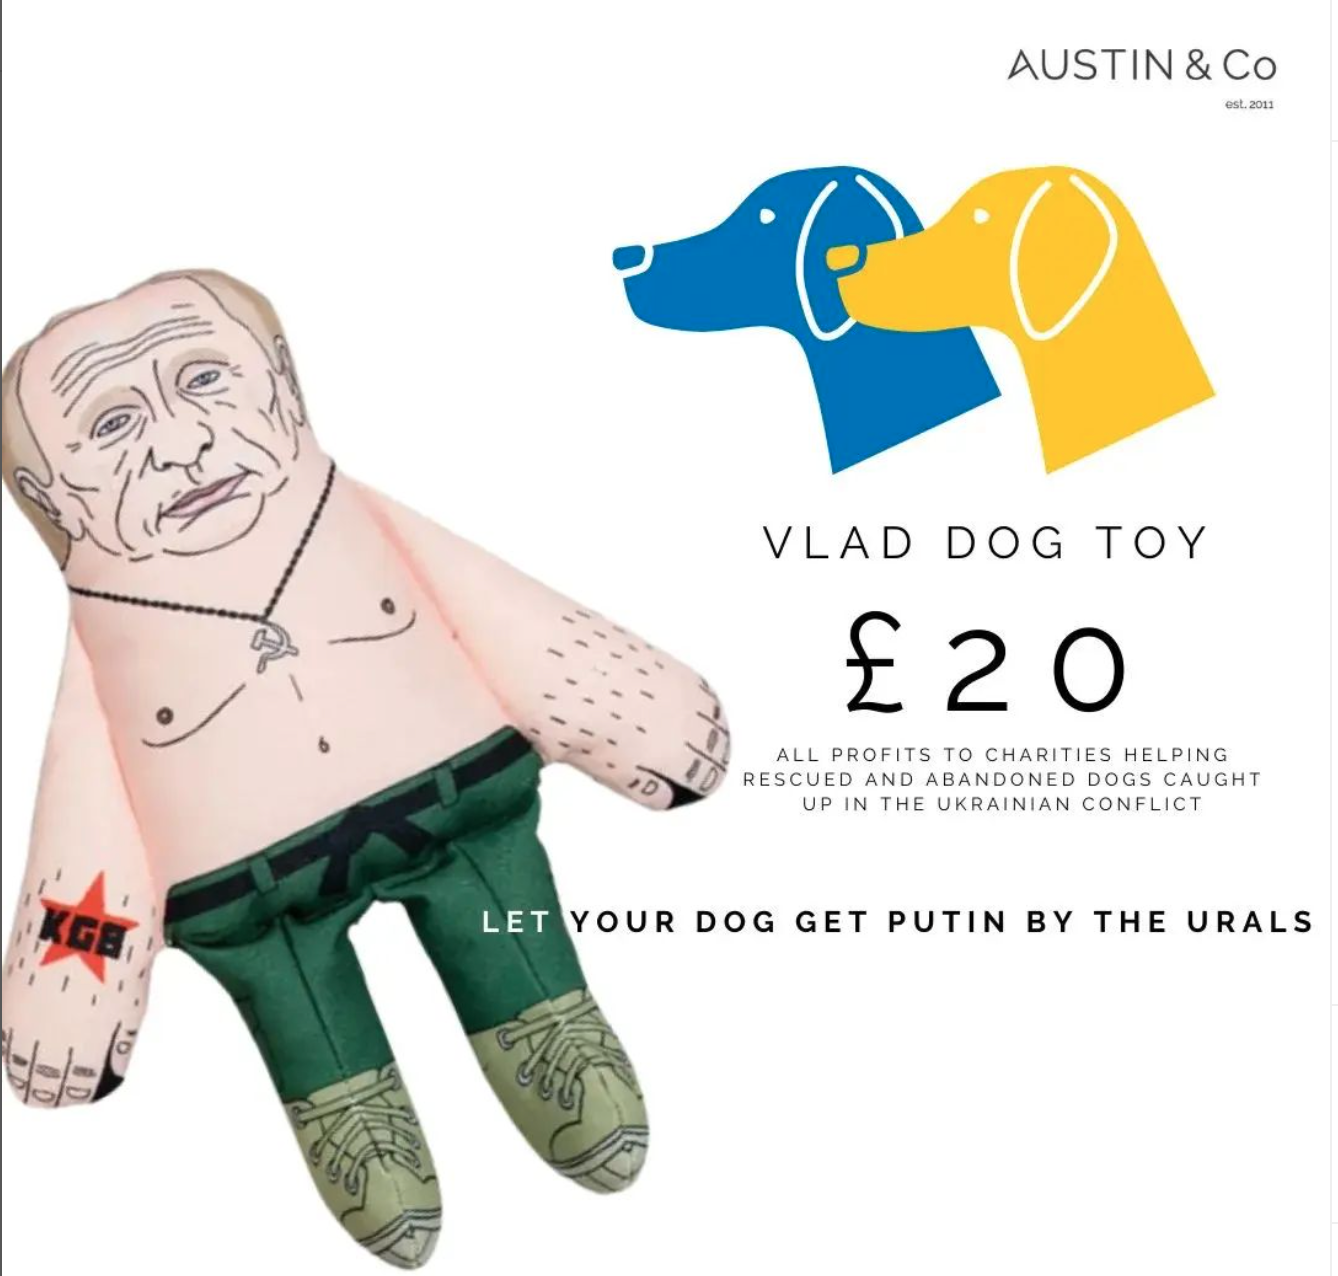 Above: Austin & Co in Malvern raised money for Ukraine by selling Putin dog toys